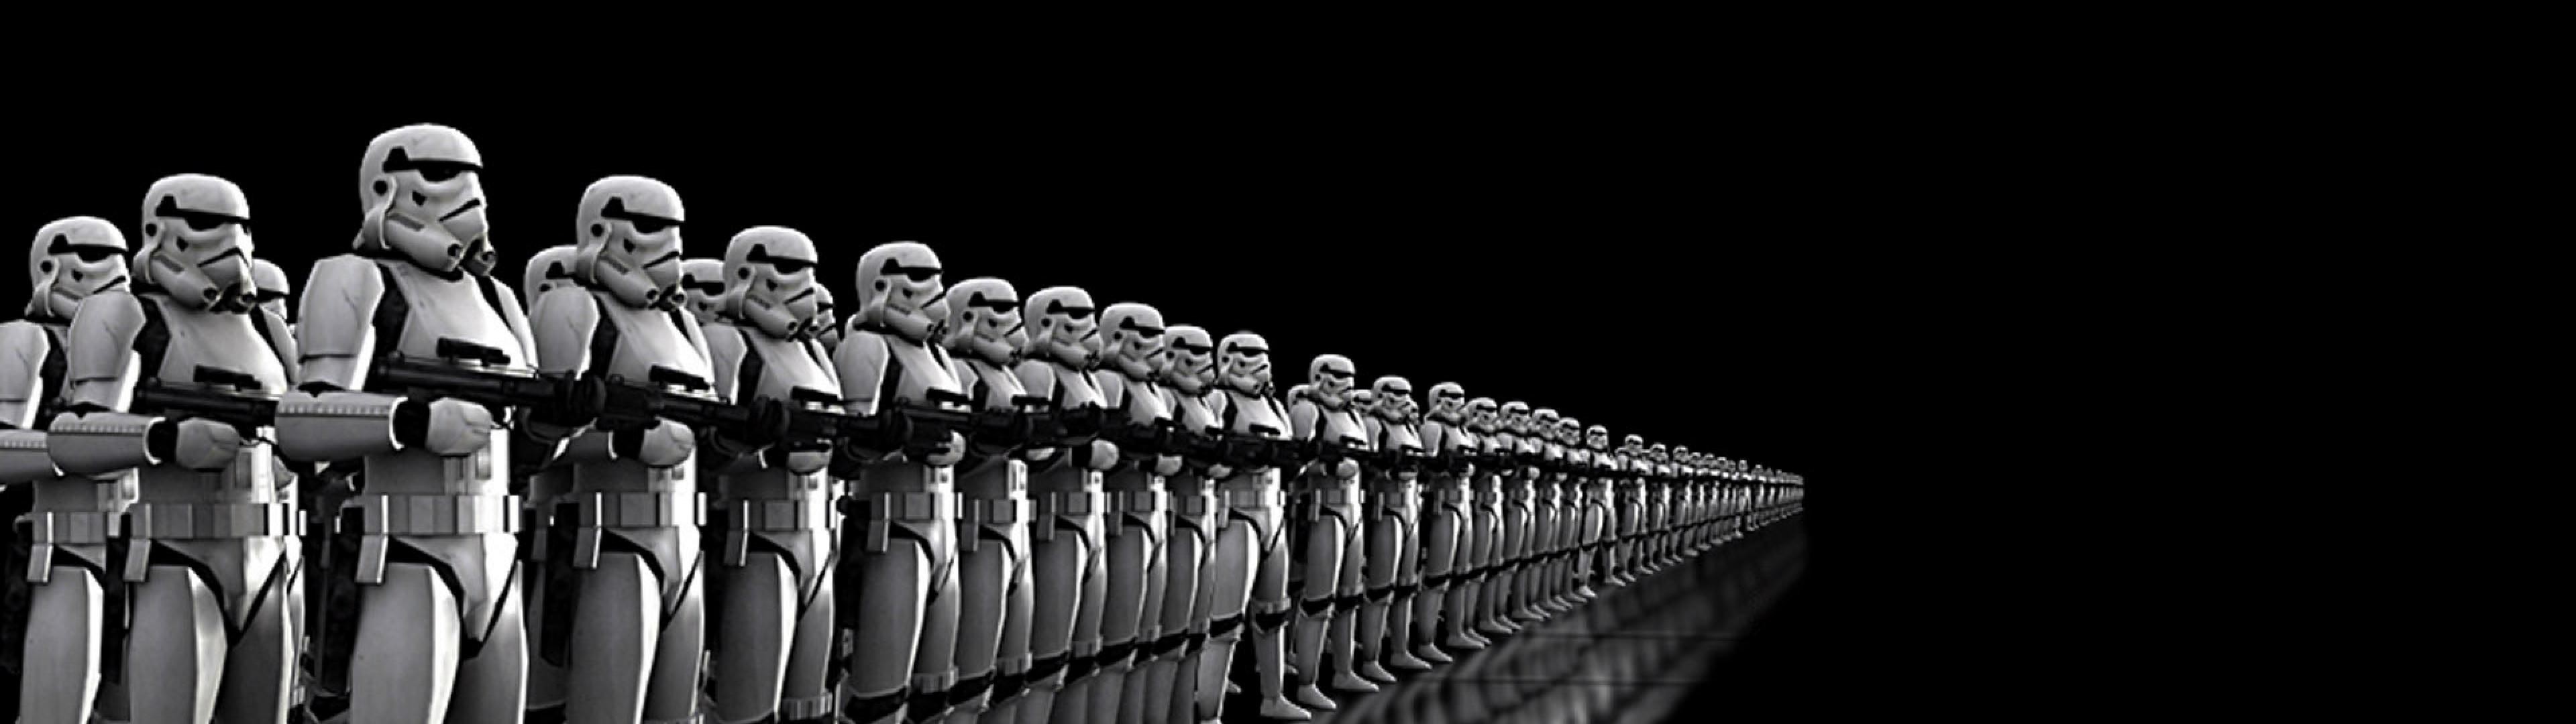 Star wars stormtroopers storm troopers HD Wallpaper – Movies TV